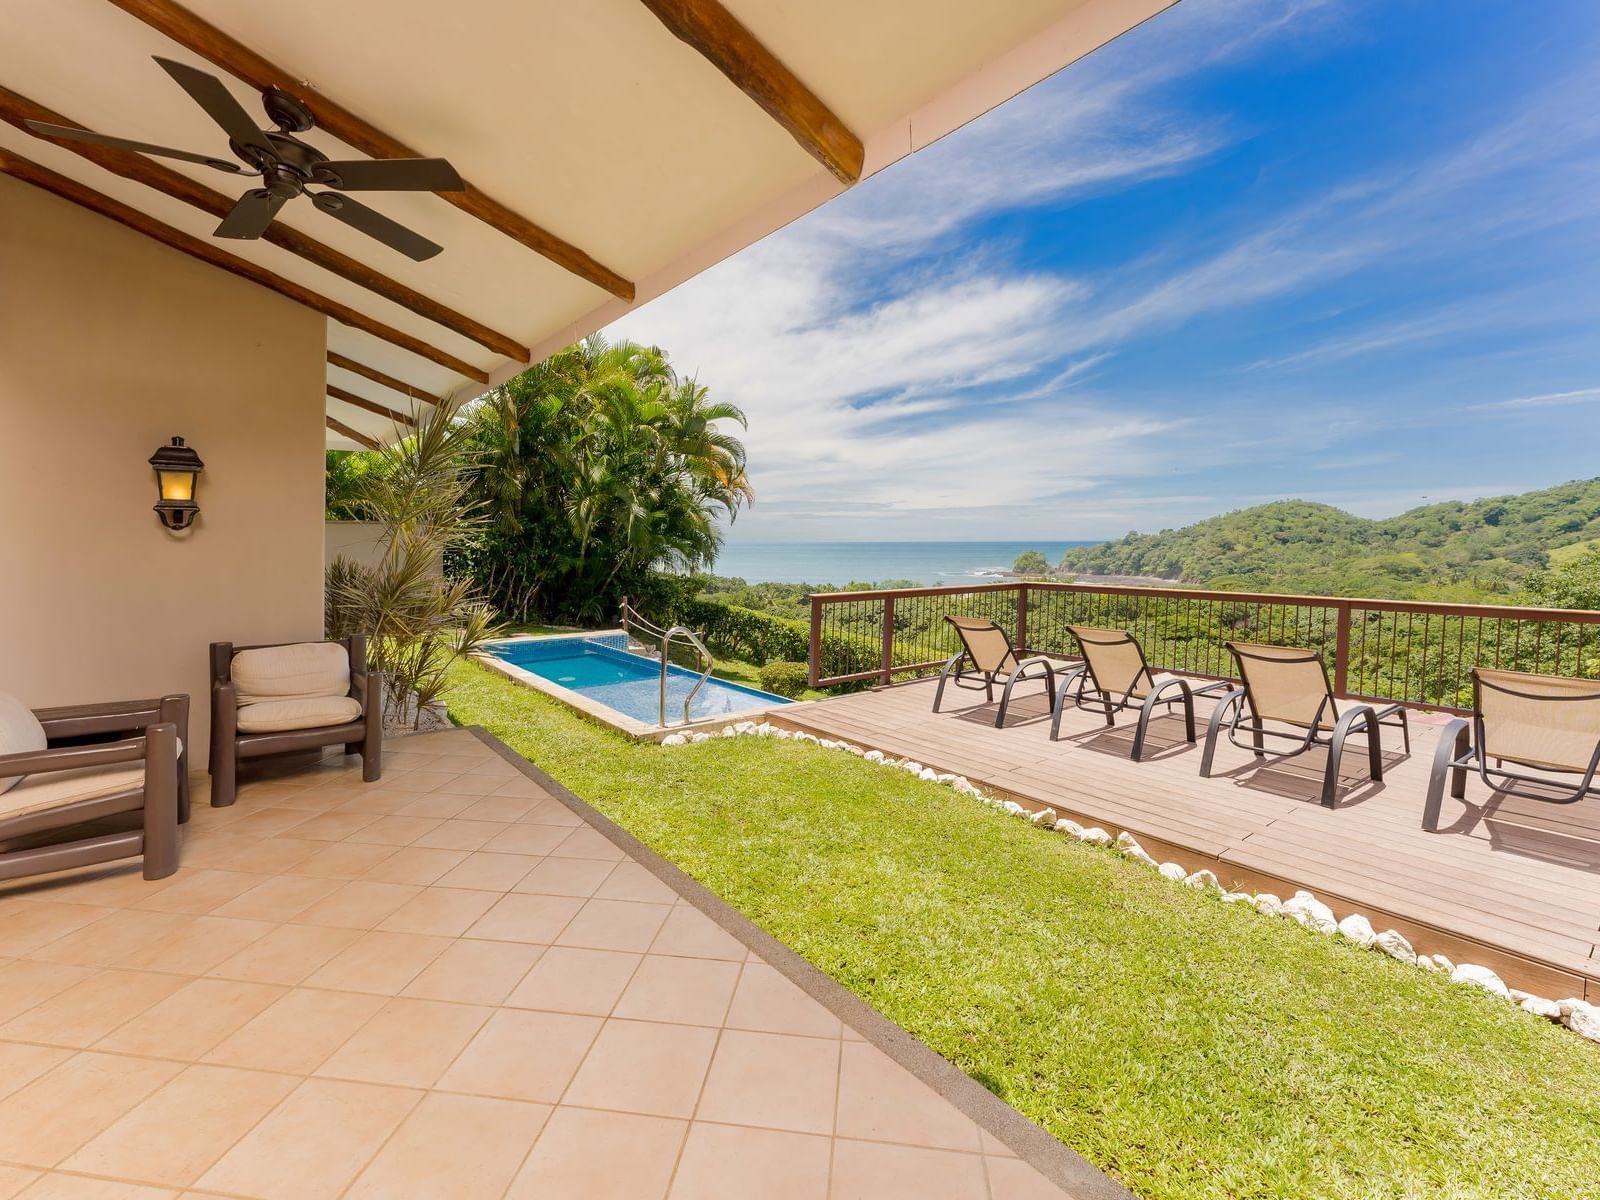 Lounge & pool area in Villa Corteza at Punta Islita Hotel